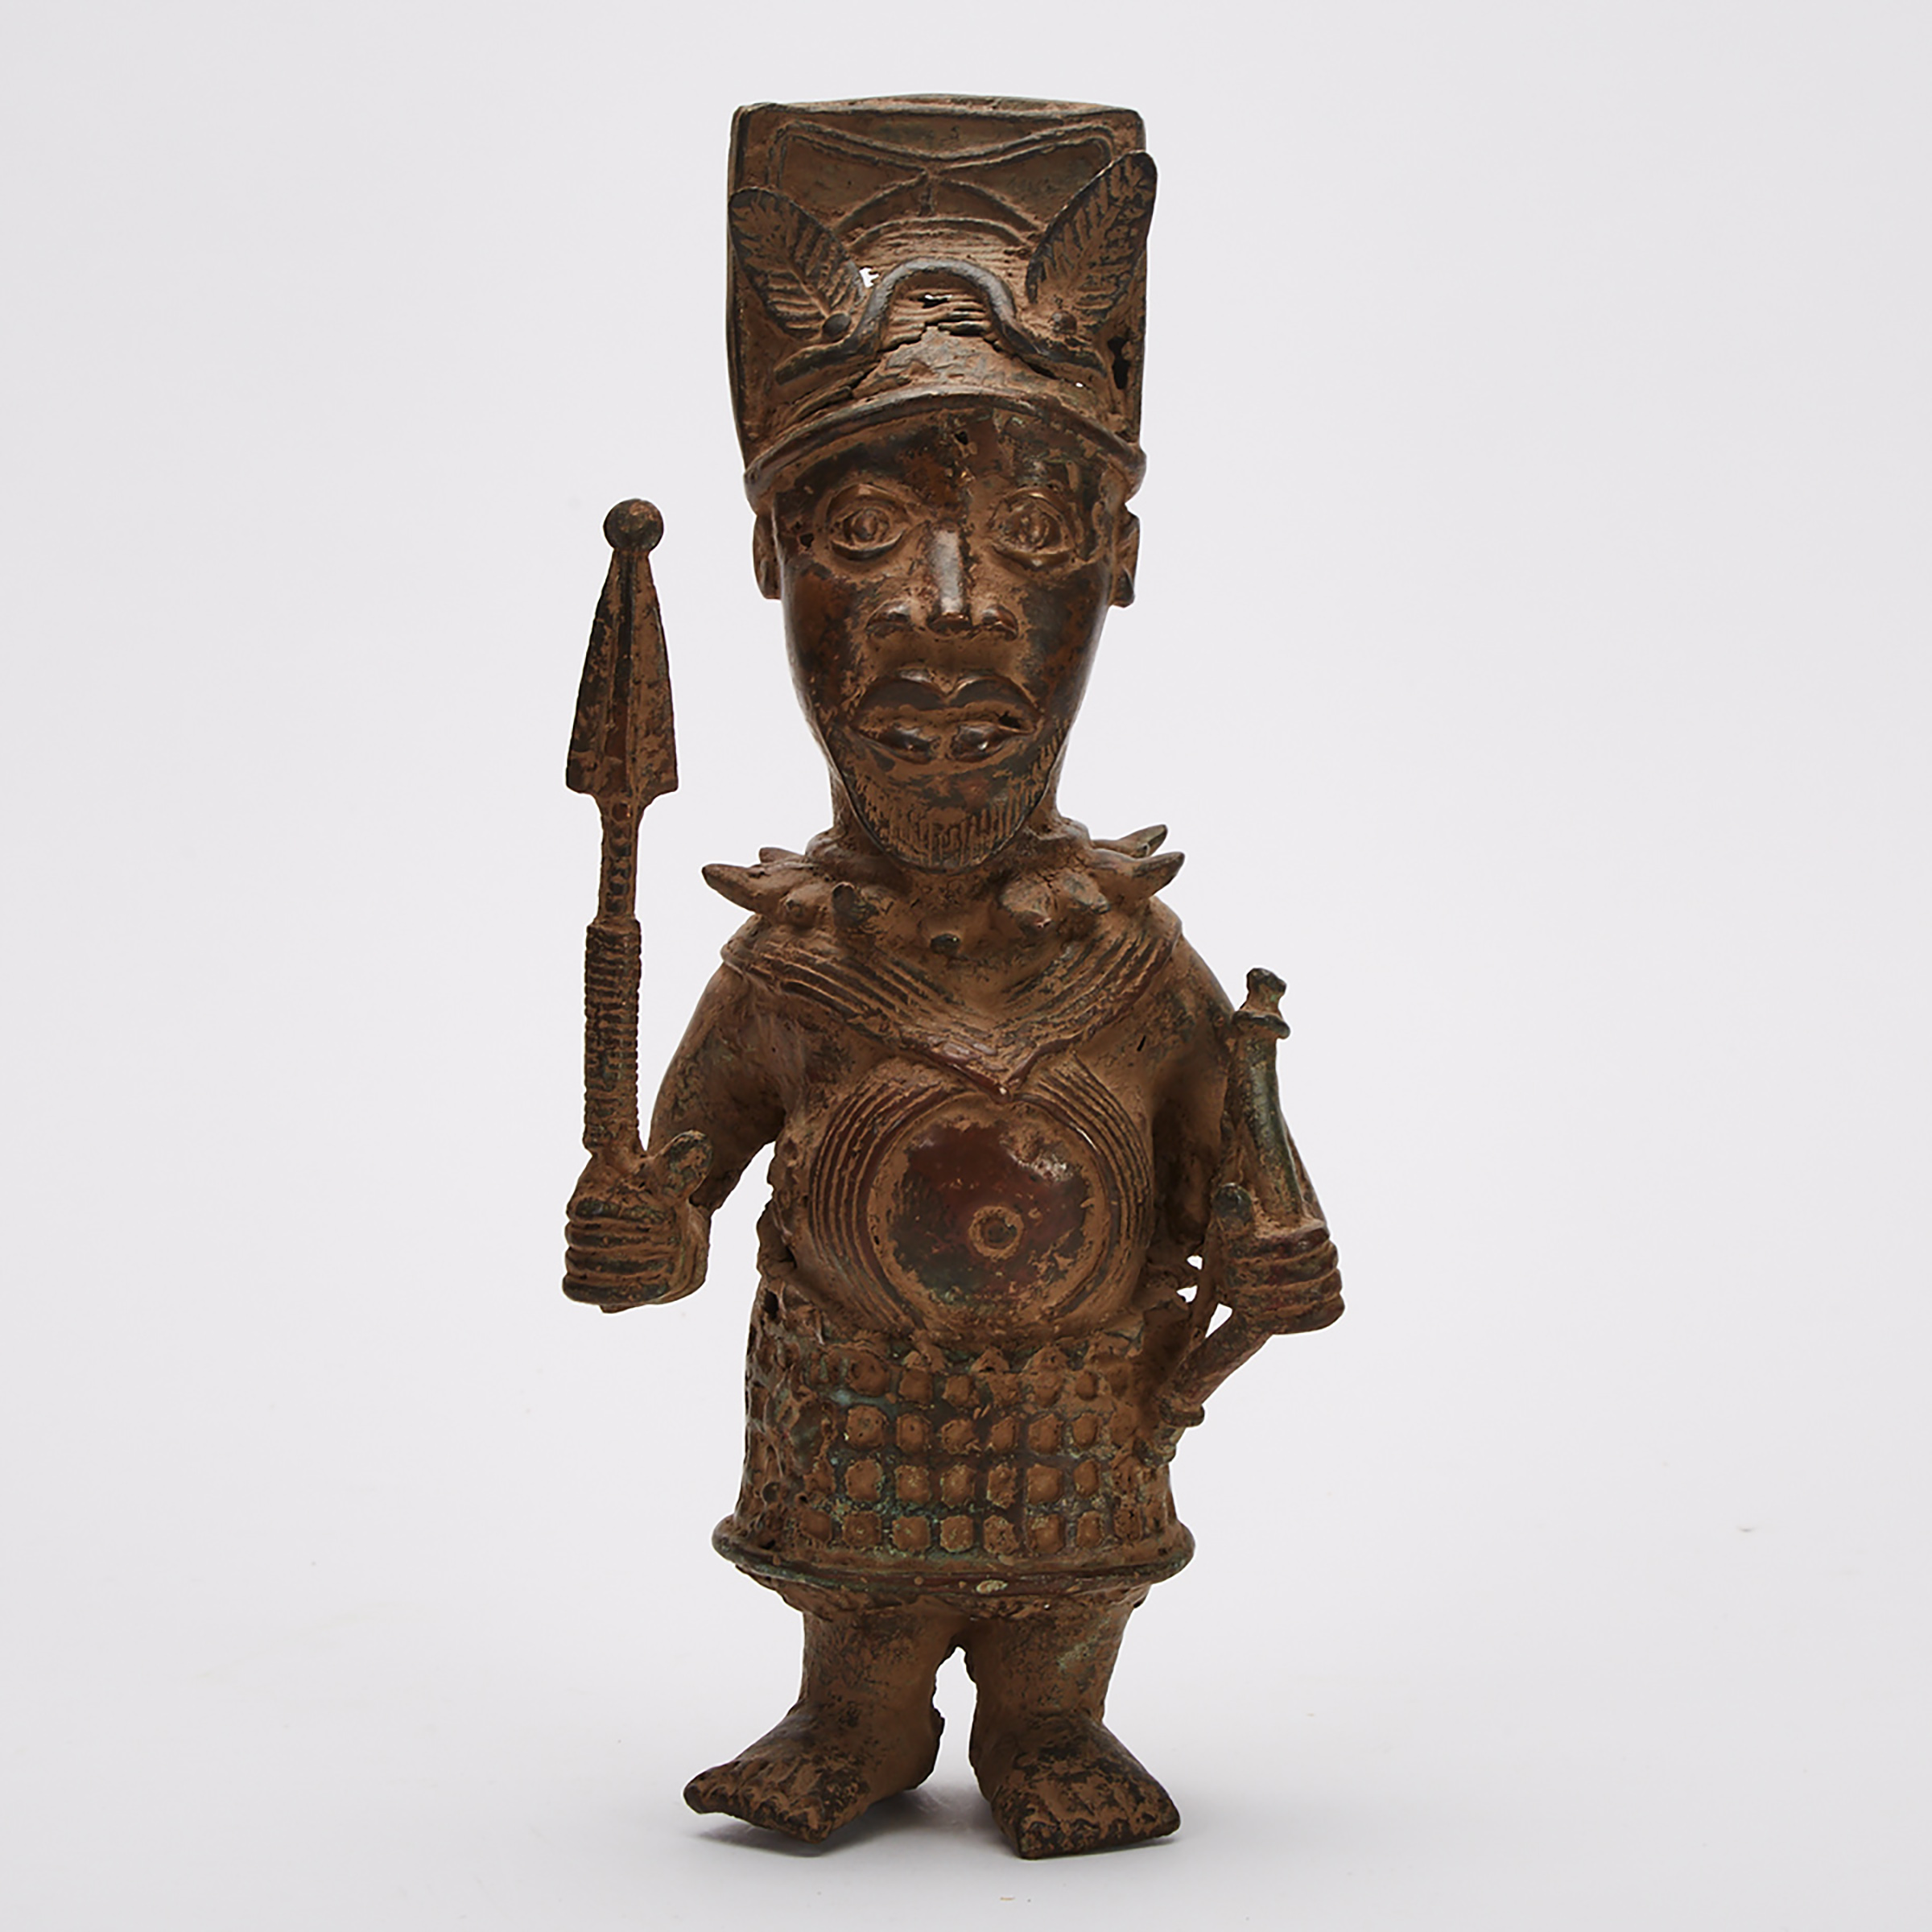 Benin Bronze Court Figure, Nigeria, West Africa